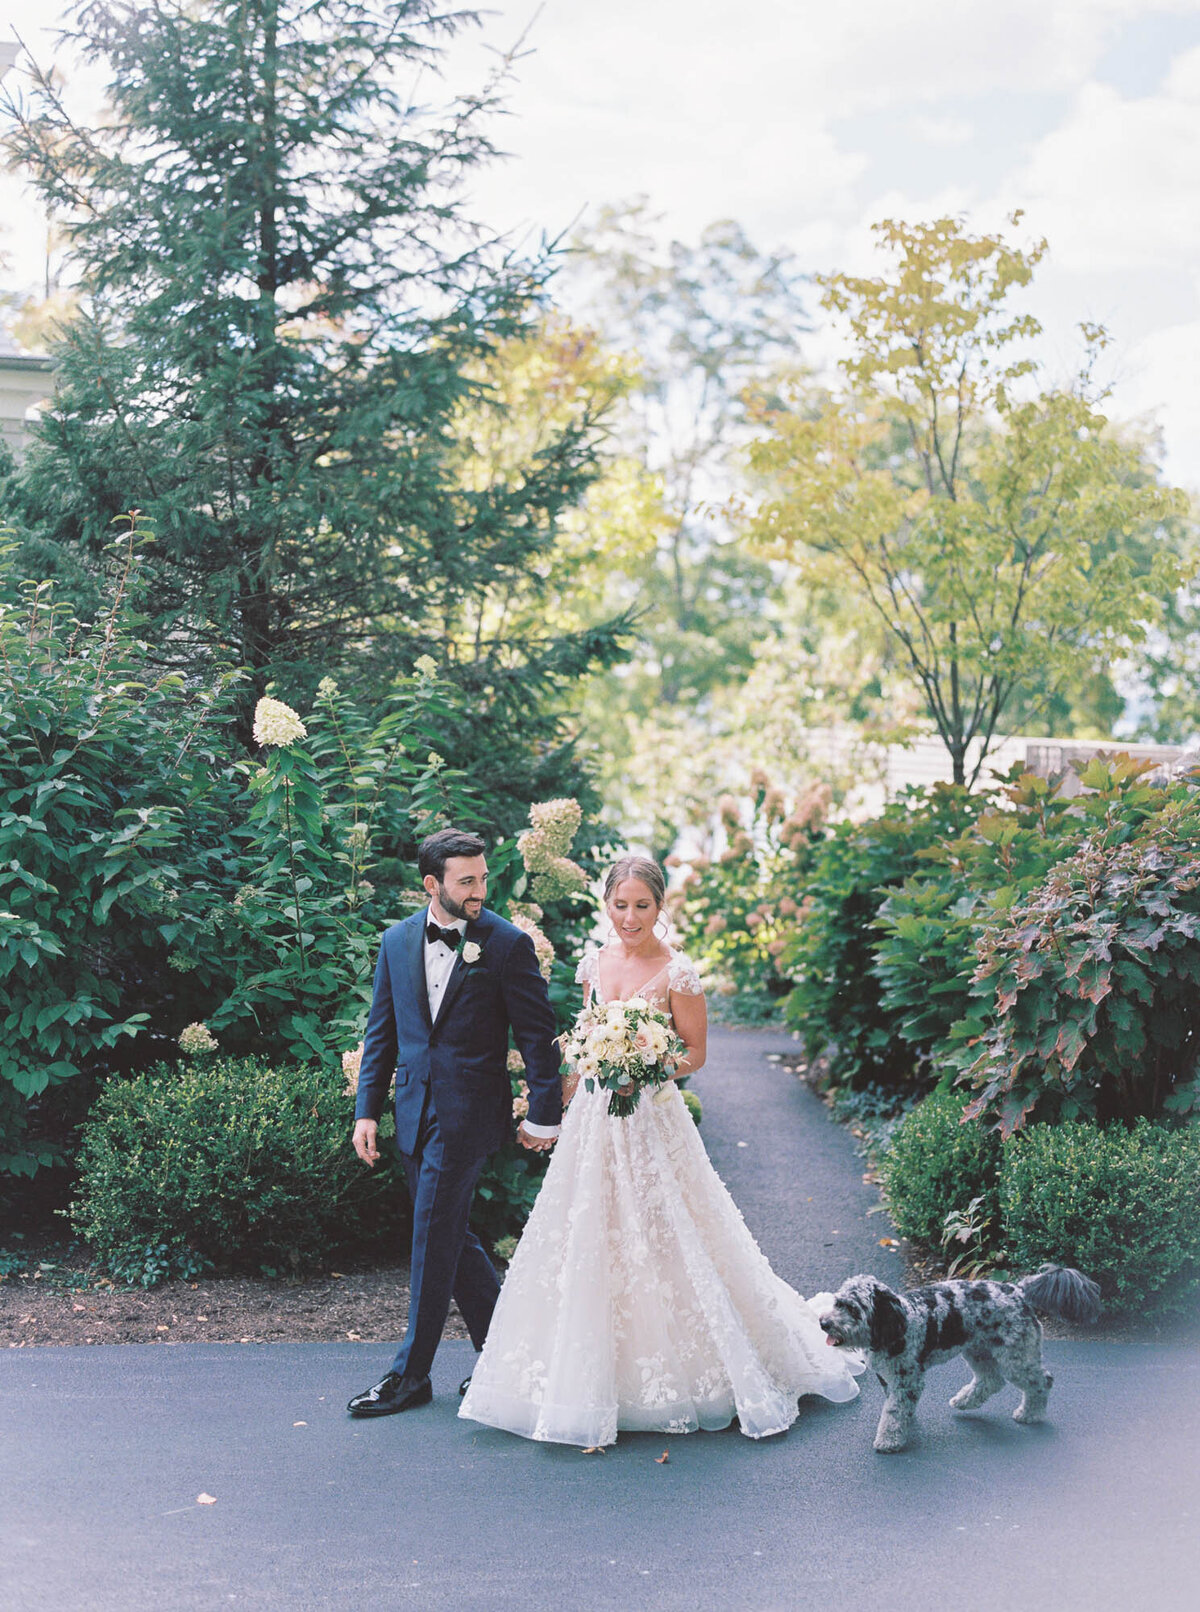 Ali-Reed-Photography-Alexandra-Elise-Photography-New-York-Film-Wedding-Photographer-New-England-059